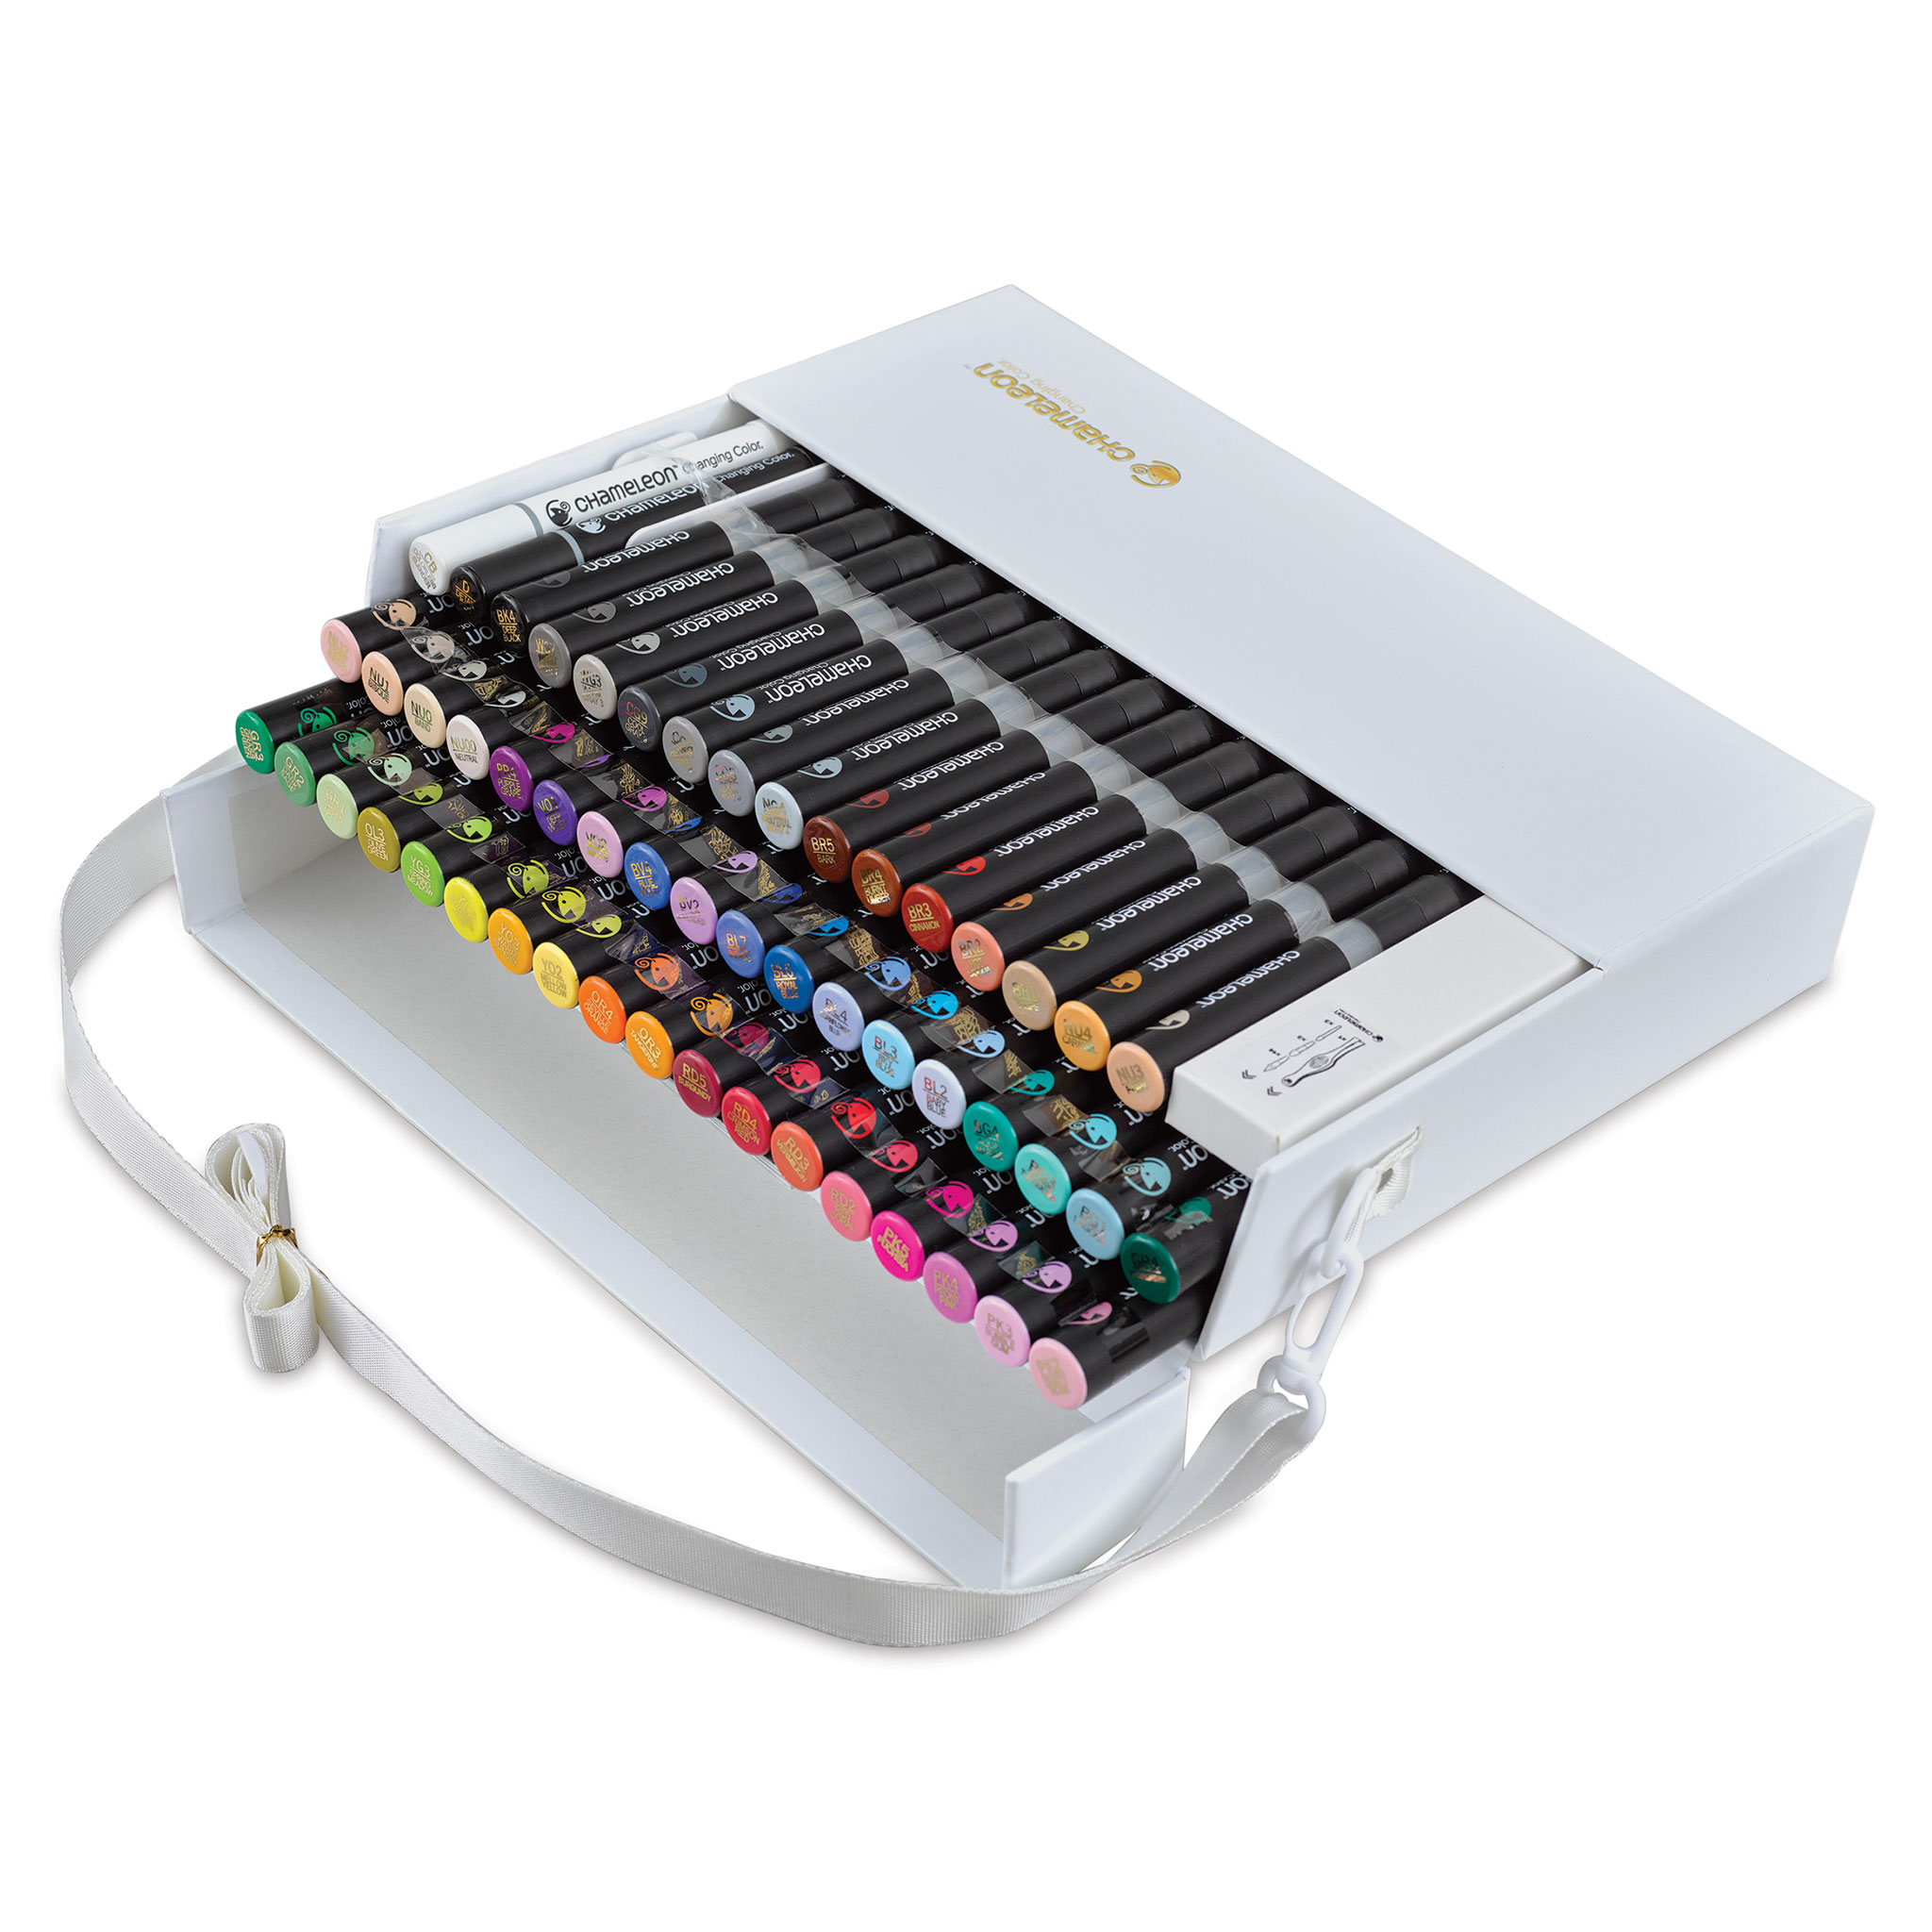 CHAMELEON DELUXE SET 30 Color Tones Colour Changing Ink Pens Professional  Set